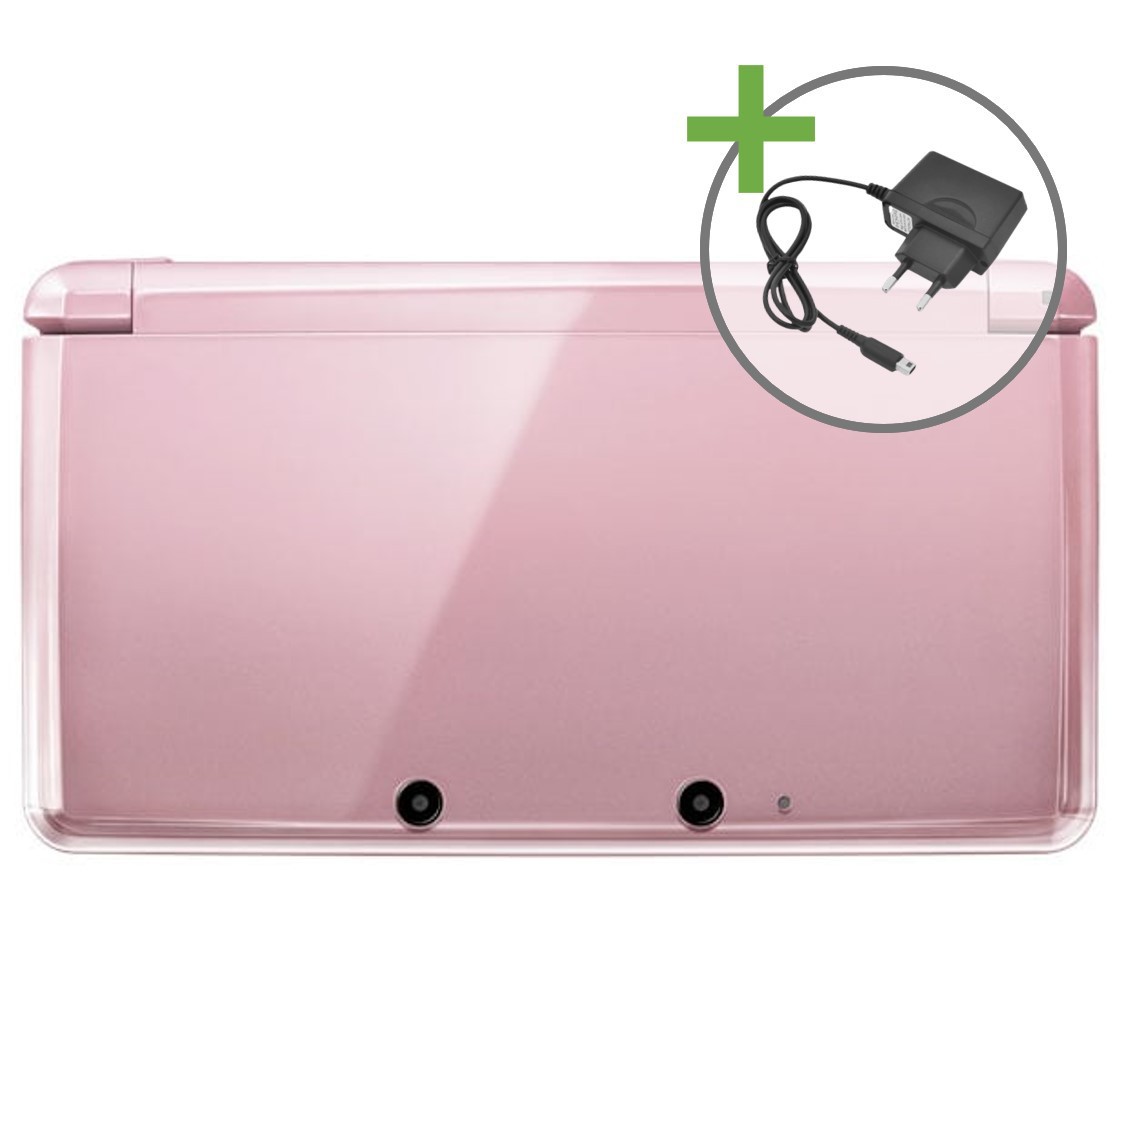 Nintendo 3DS - Coral Pink [Complete] - Nintendo 3DS Hardware - 4